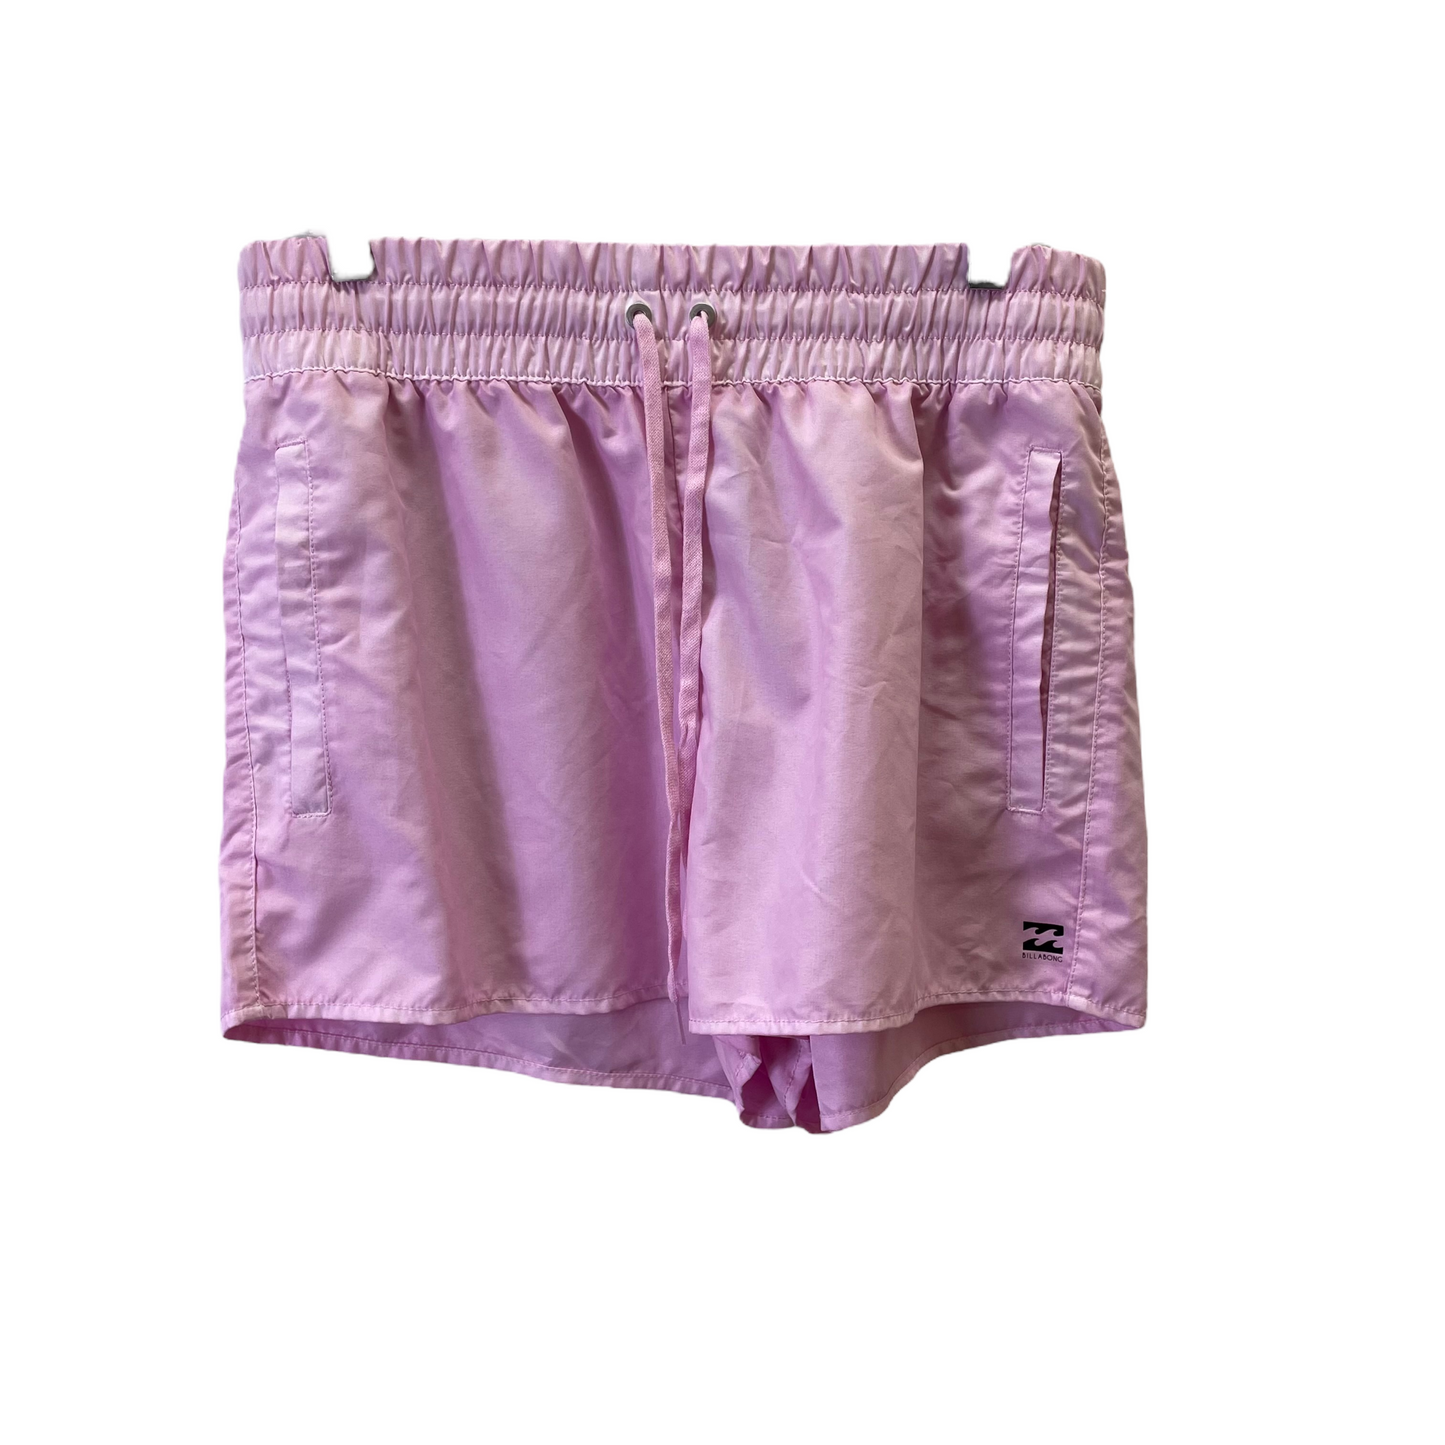 Pink Shorts By Billabong, Size: Xl